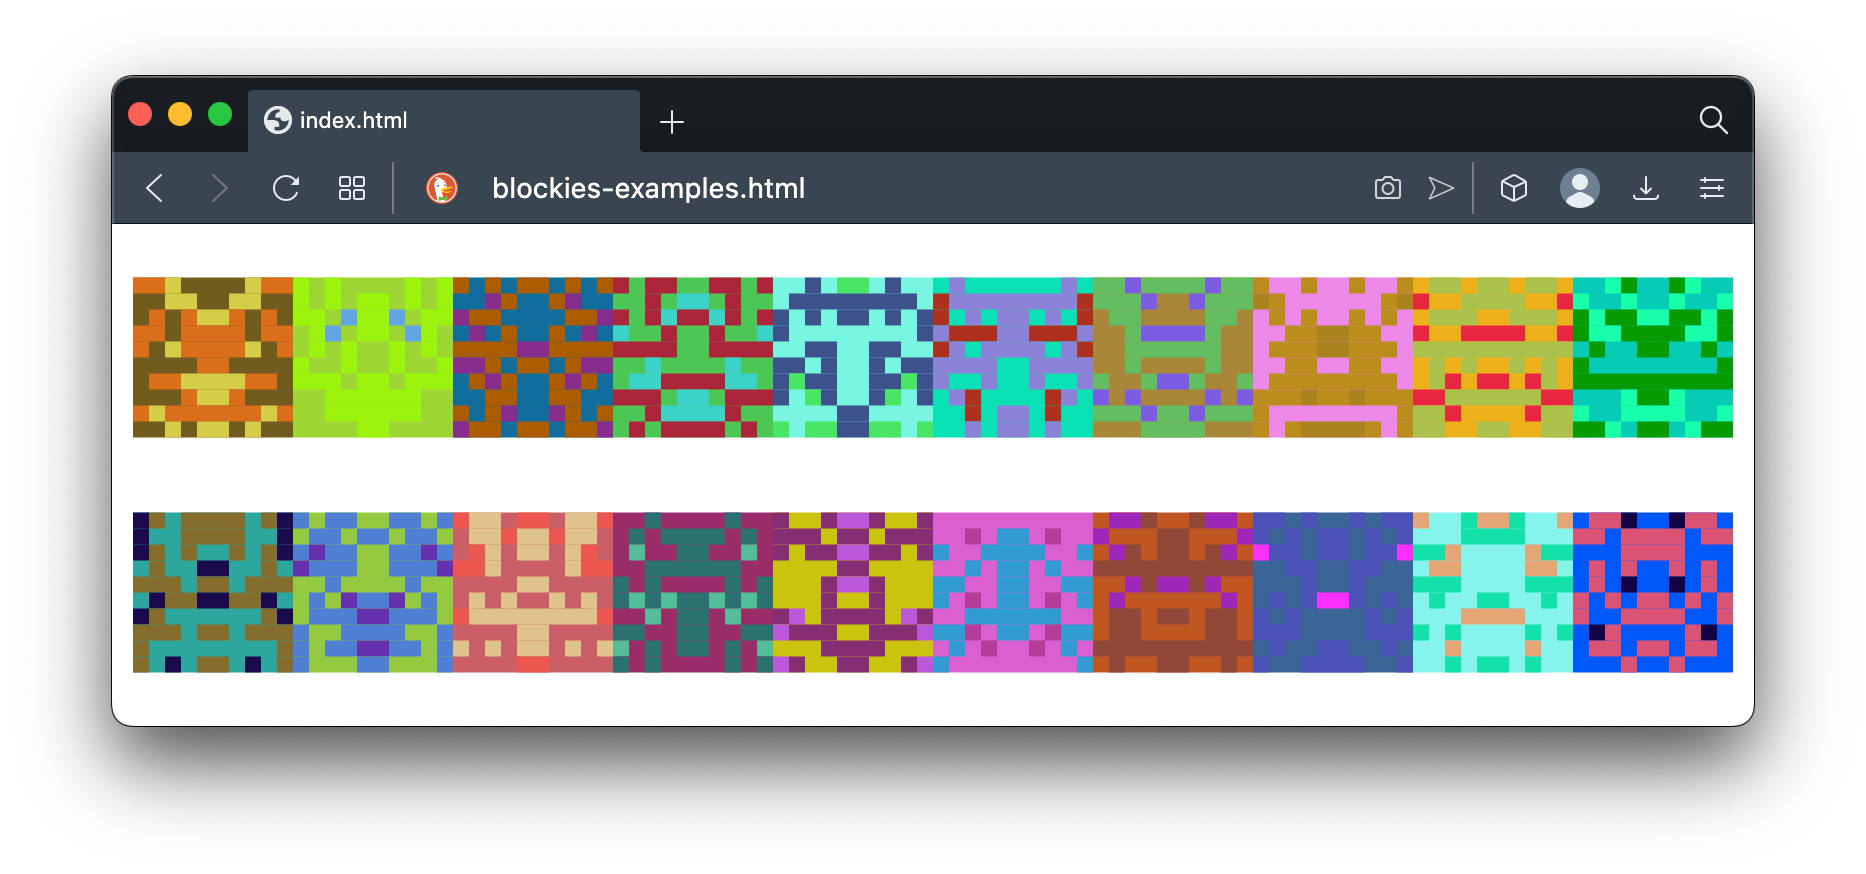 Blockies Examples